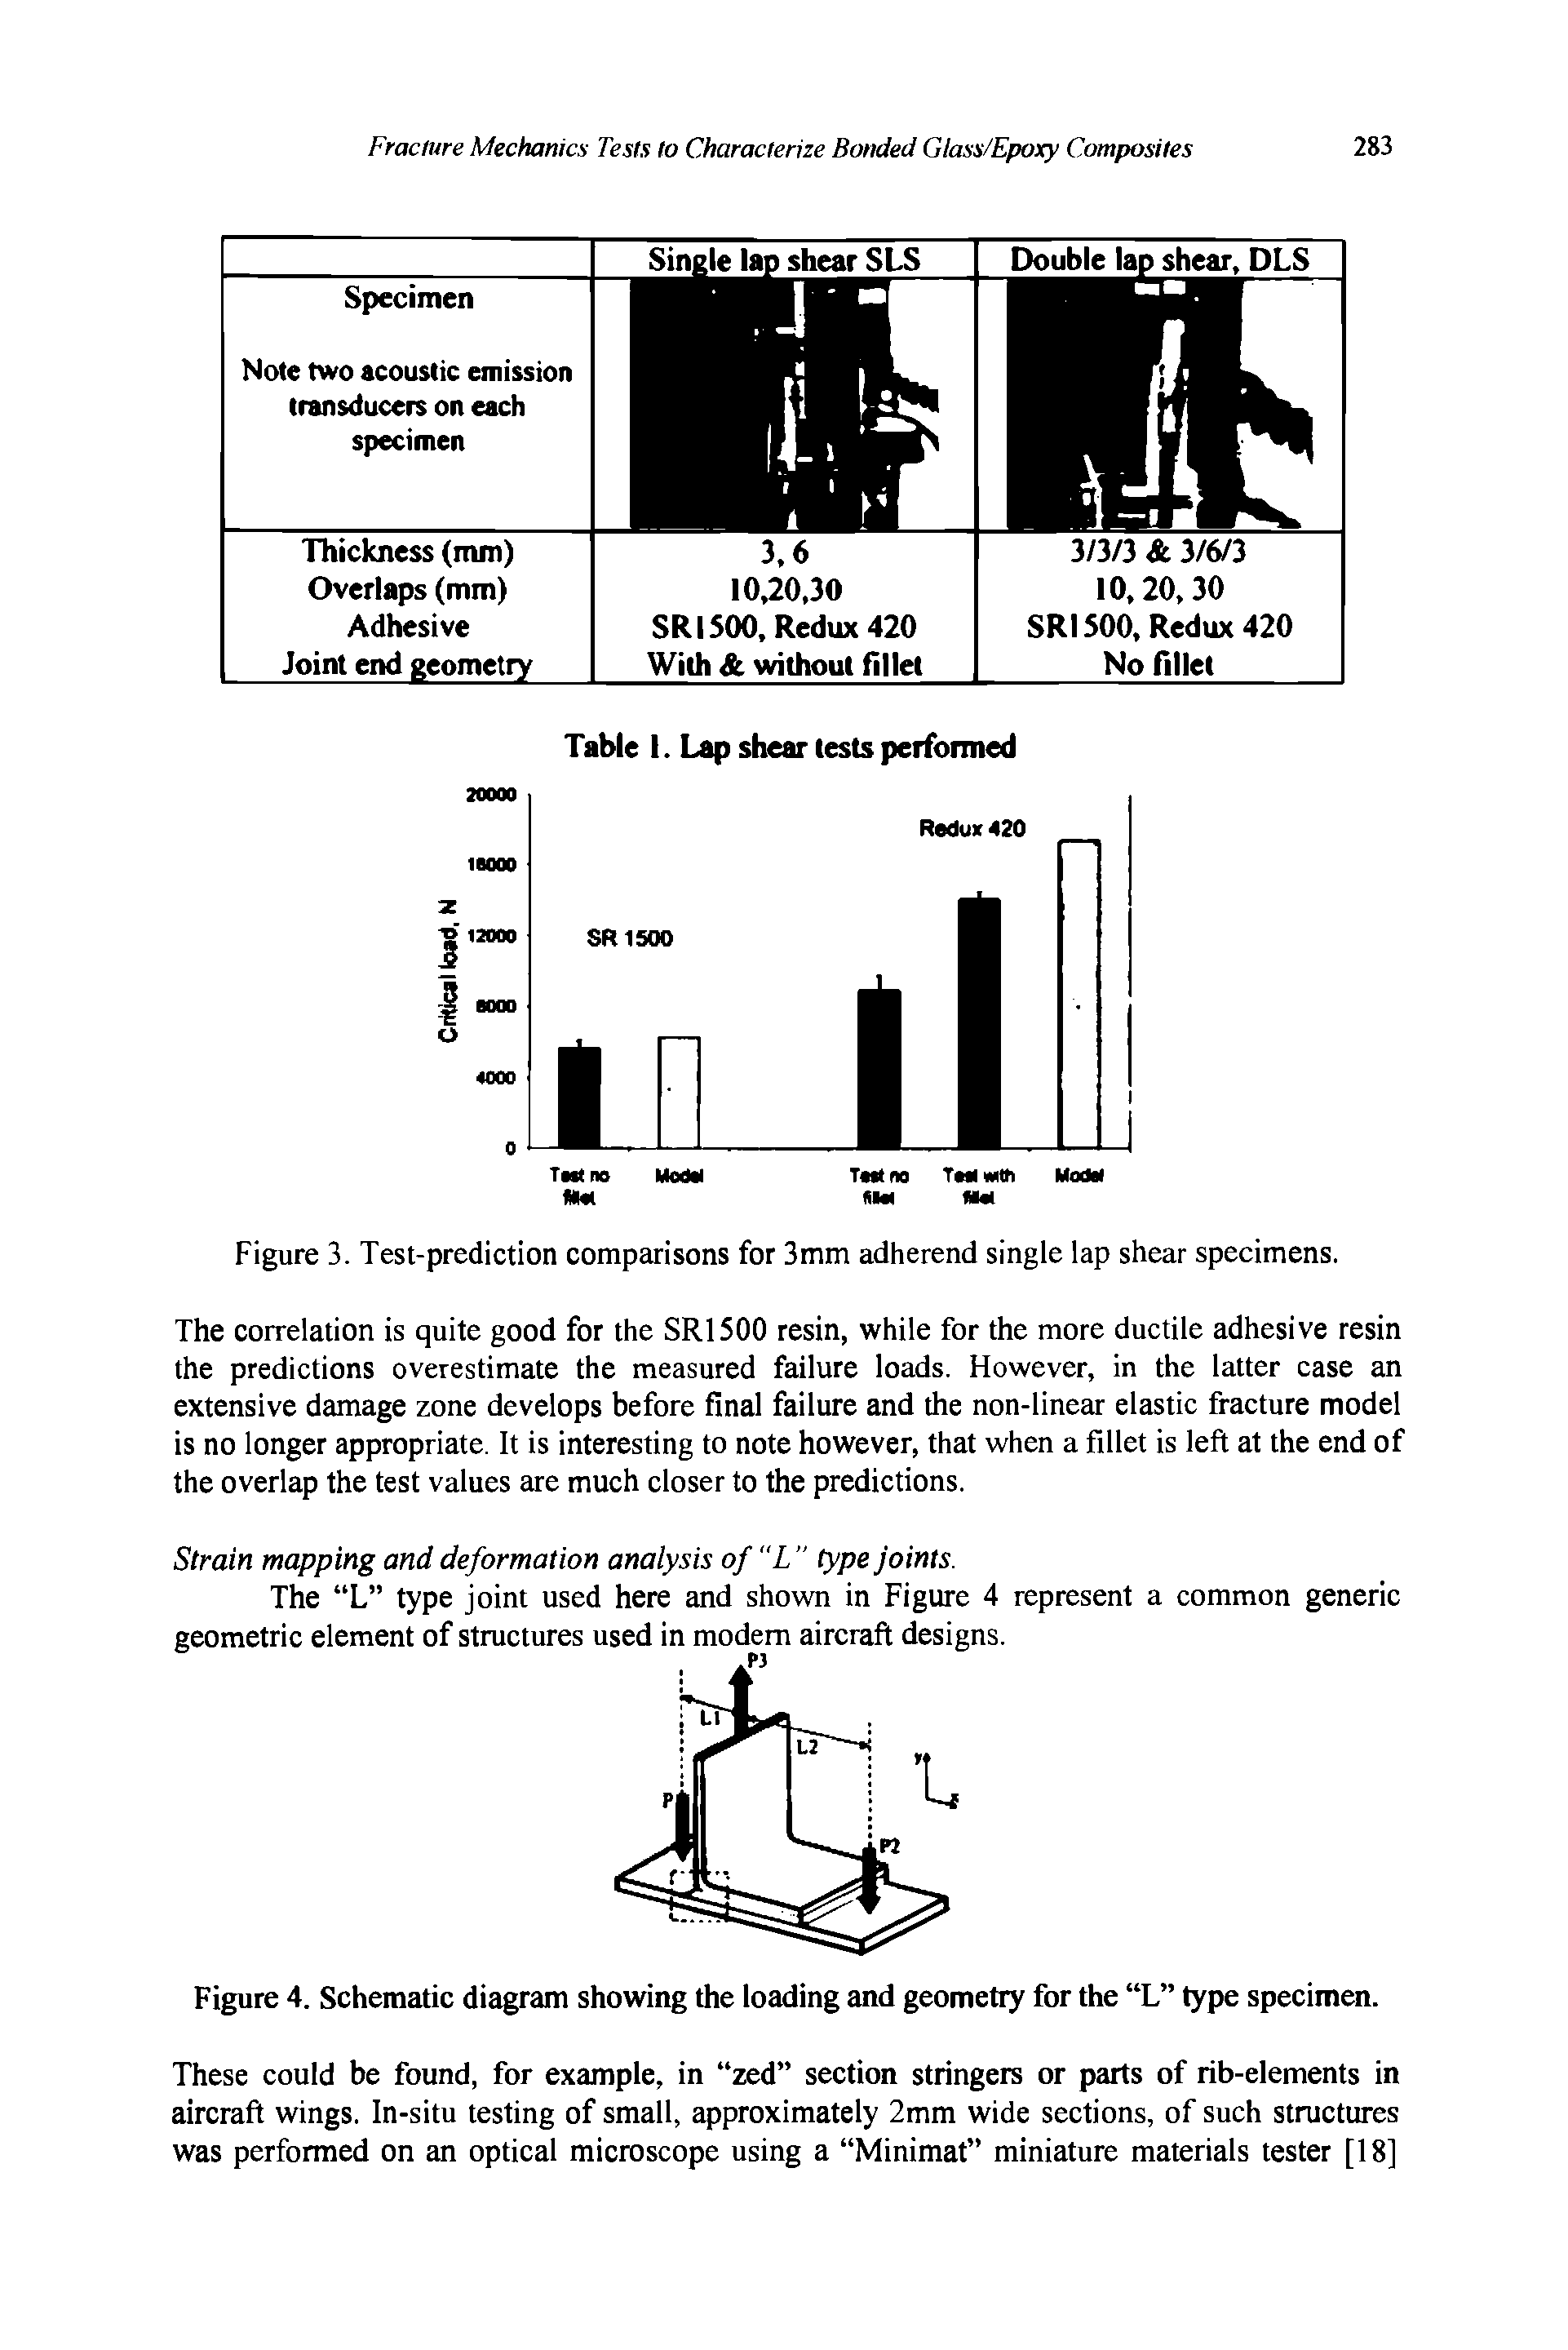 Figure 3. Test-prediction comparisons for 3mm adherend single lap shear specimens.